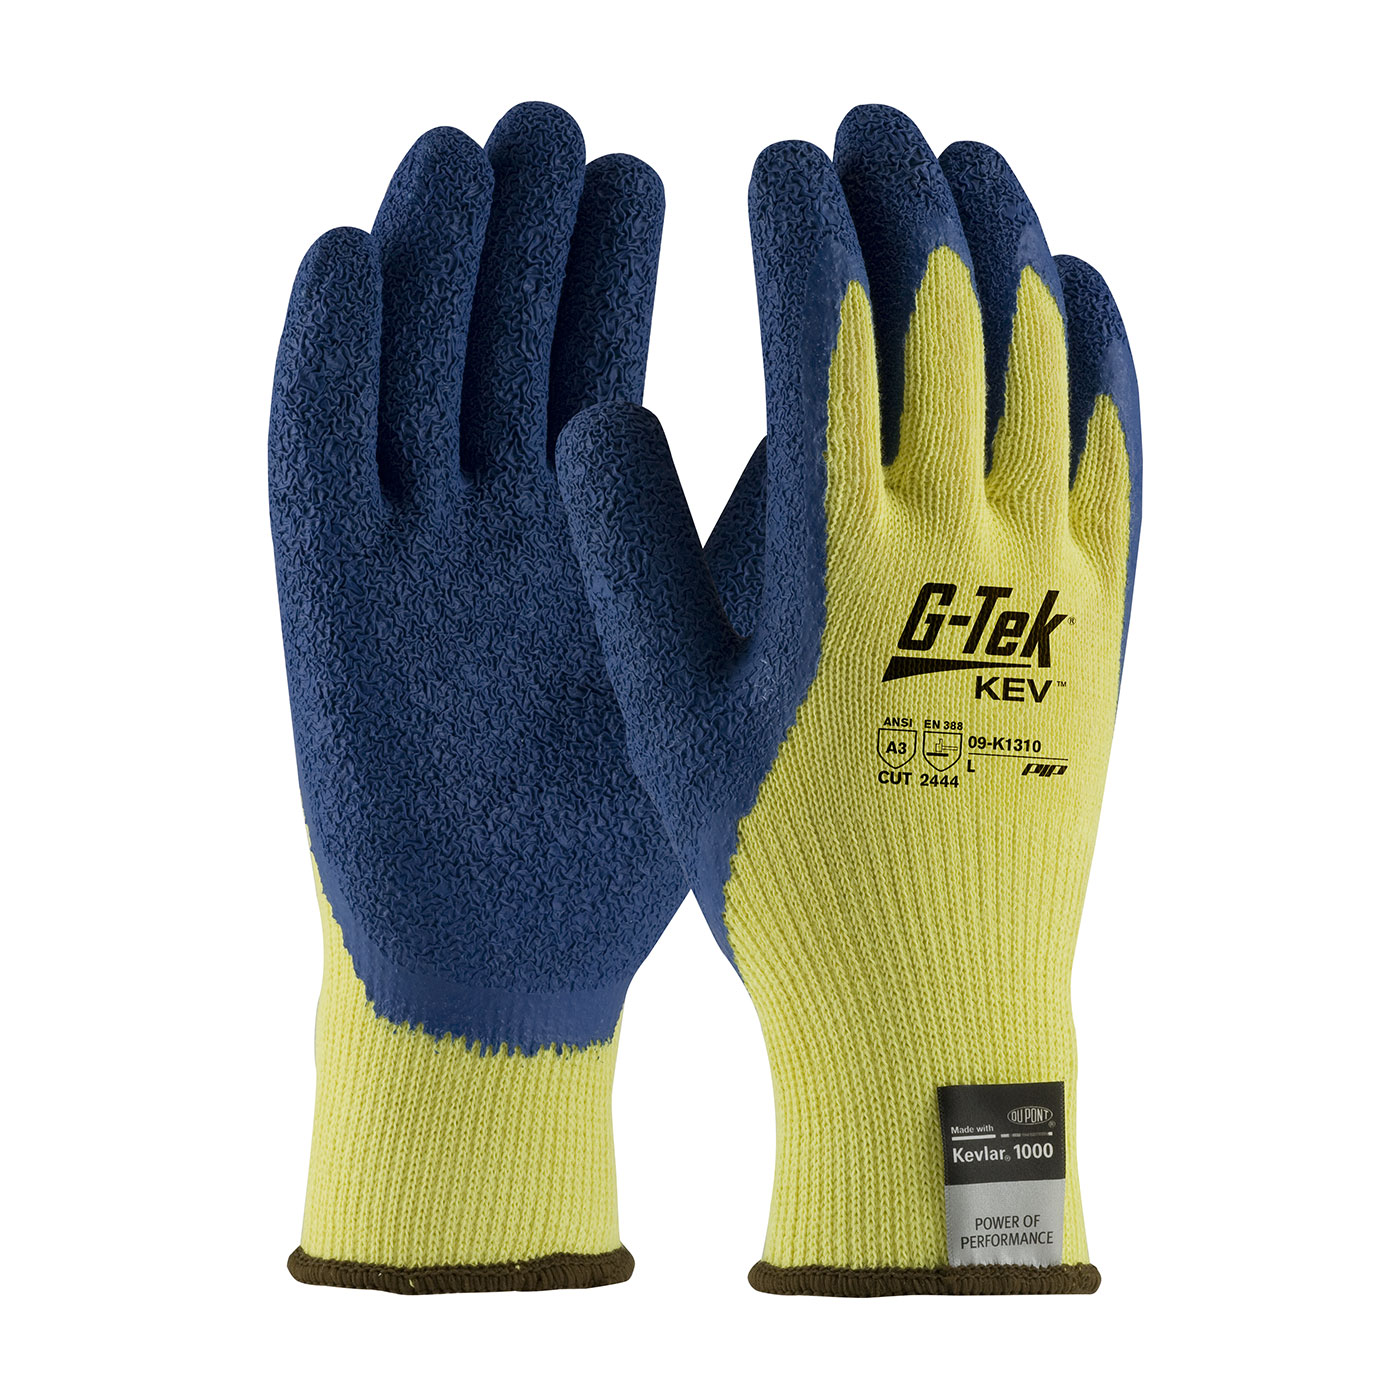 #09-K1310 PIP G-Tek®KEV™Kevlar®乳胶涂层抗切割防护工作手套，带褶皱涂层。减少3级。